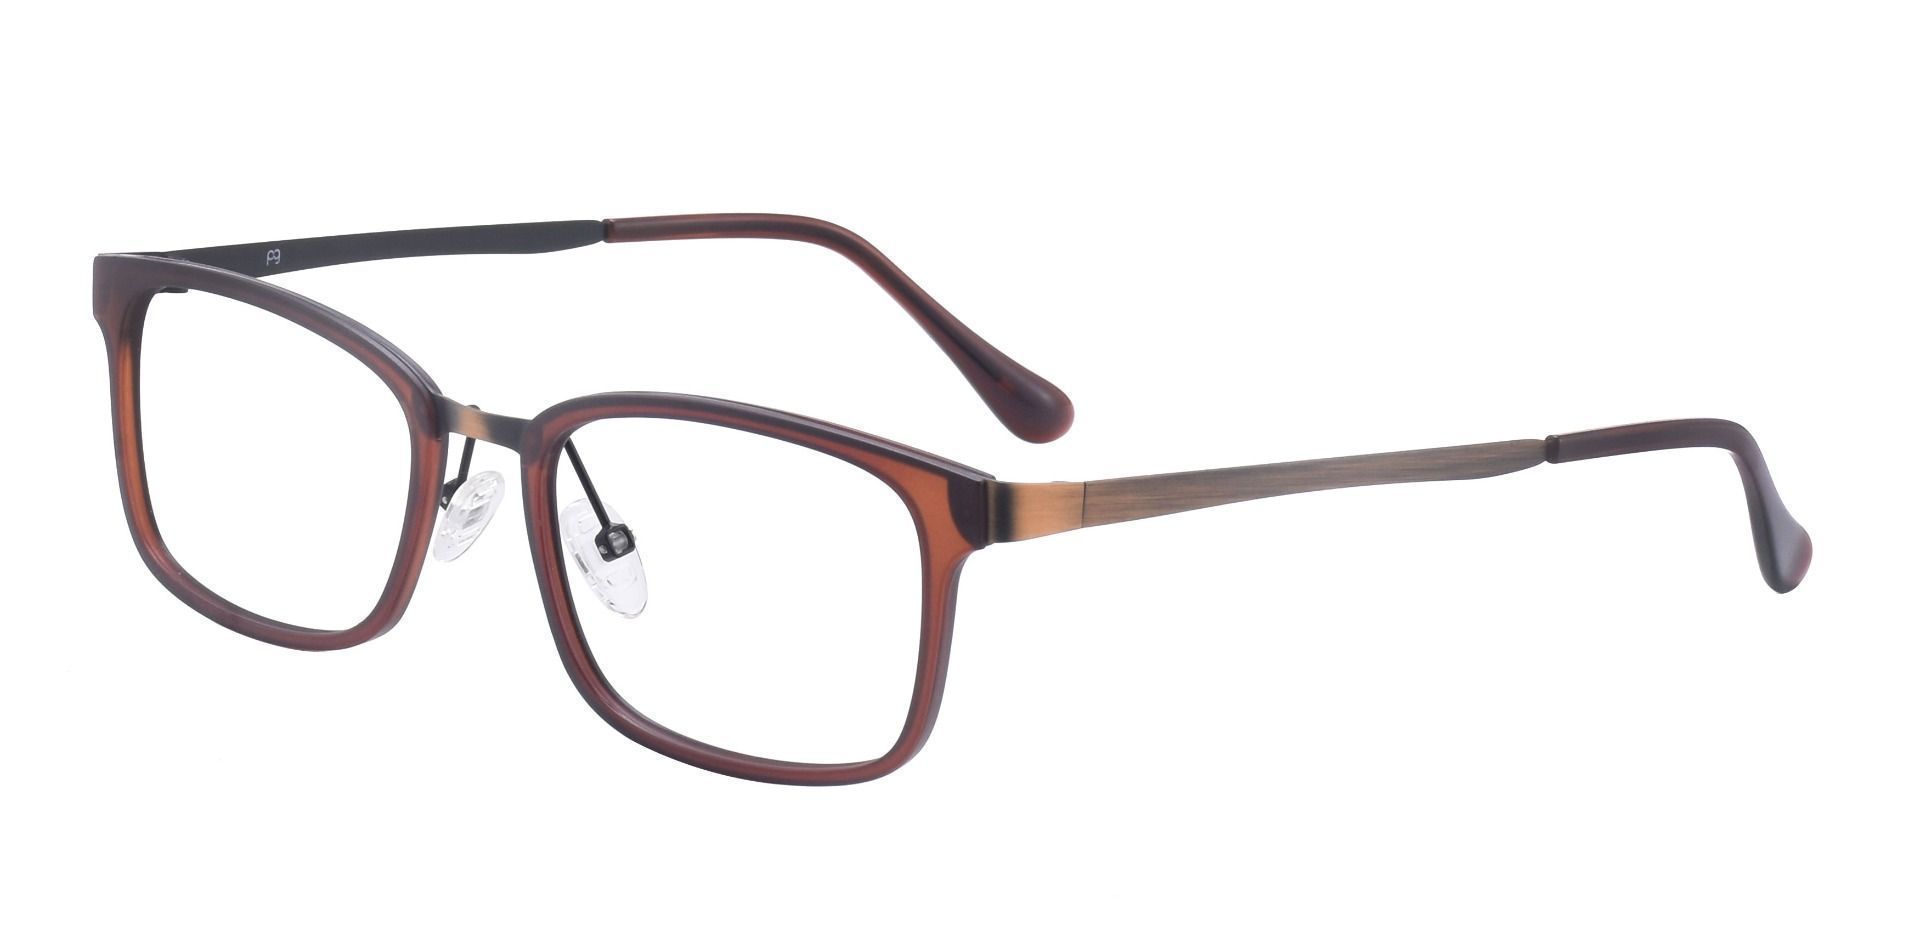 Kensington Square Progressive Glasses - Brown